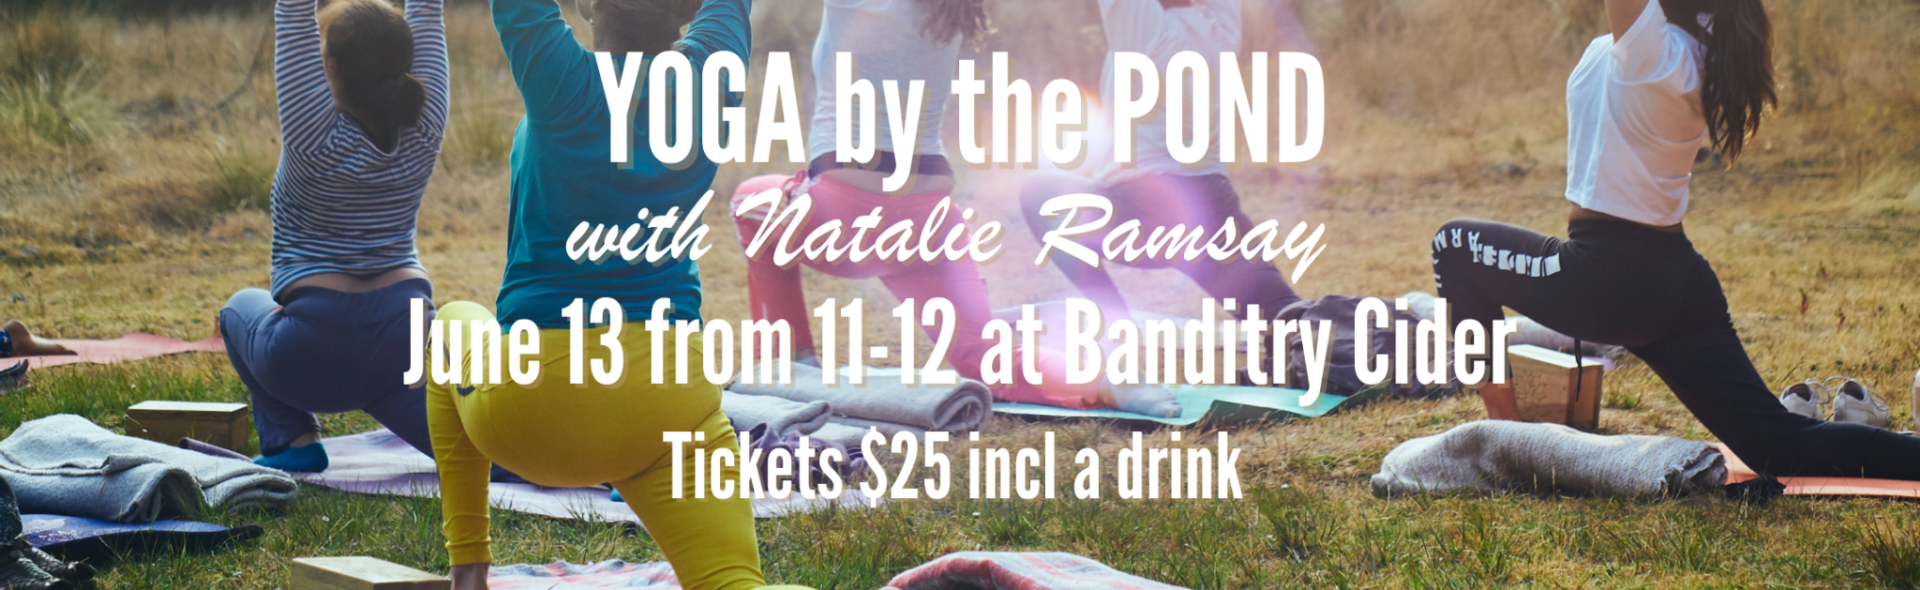 Banditry Cider: Yoga by the Pond